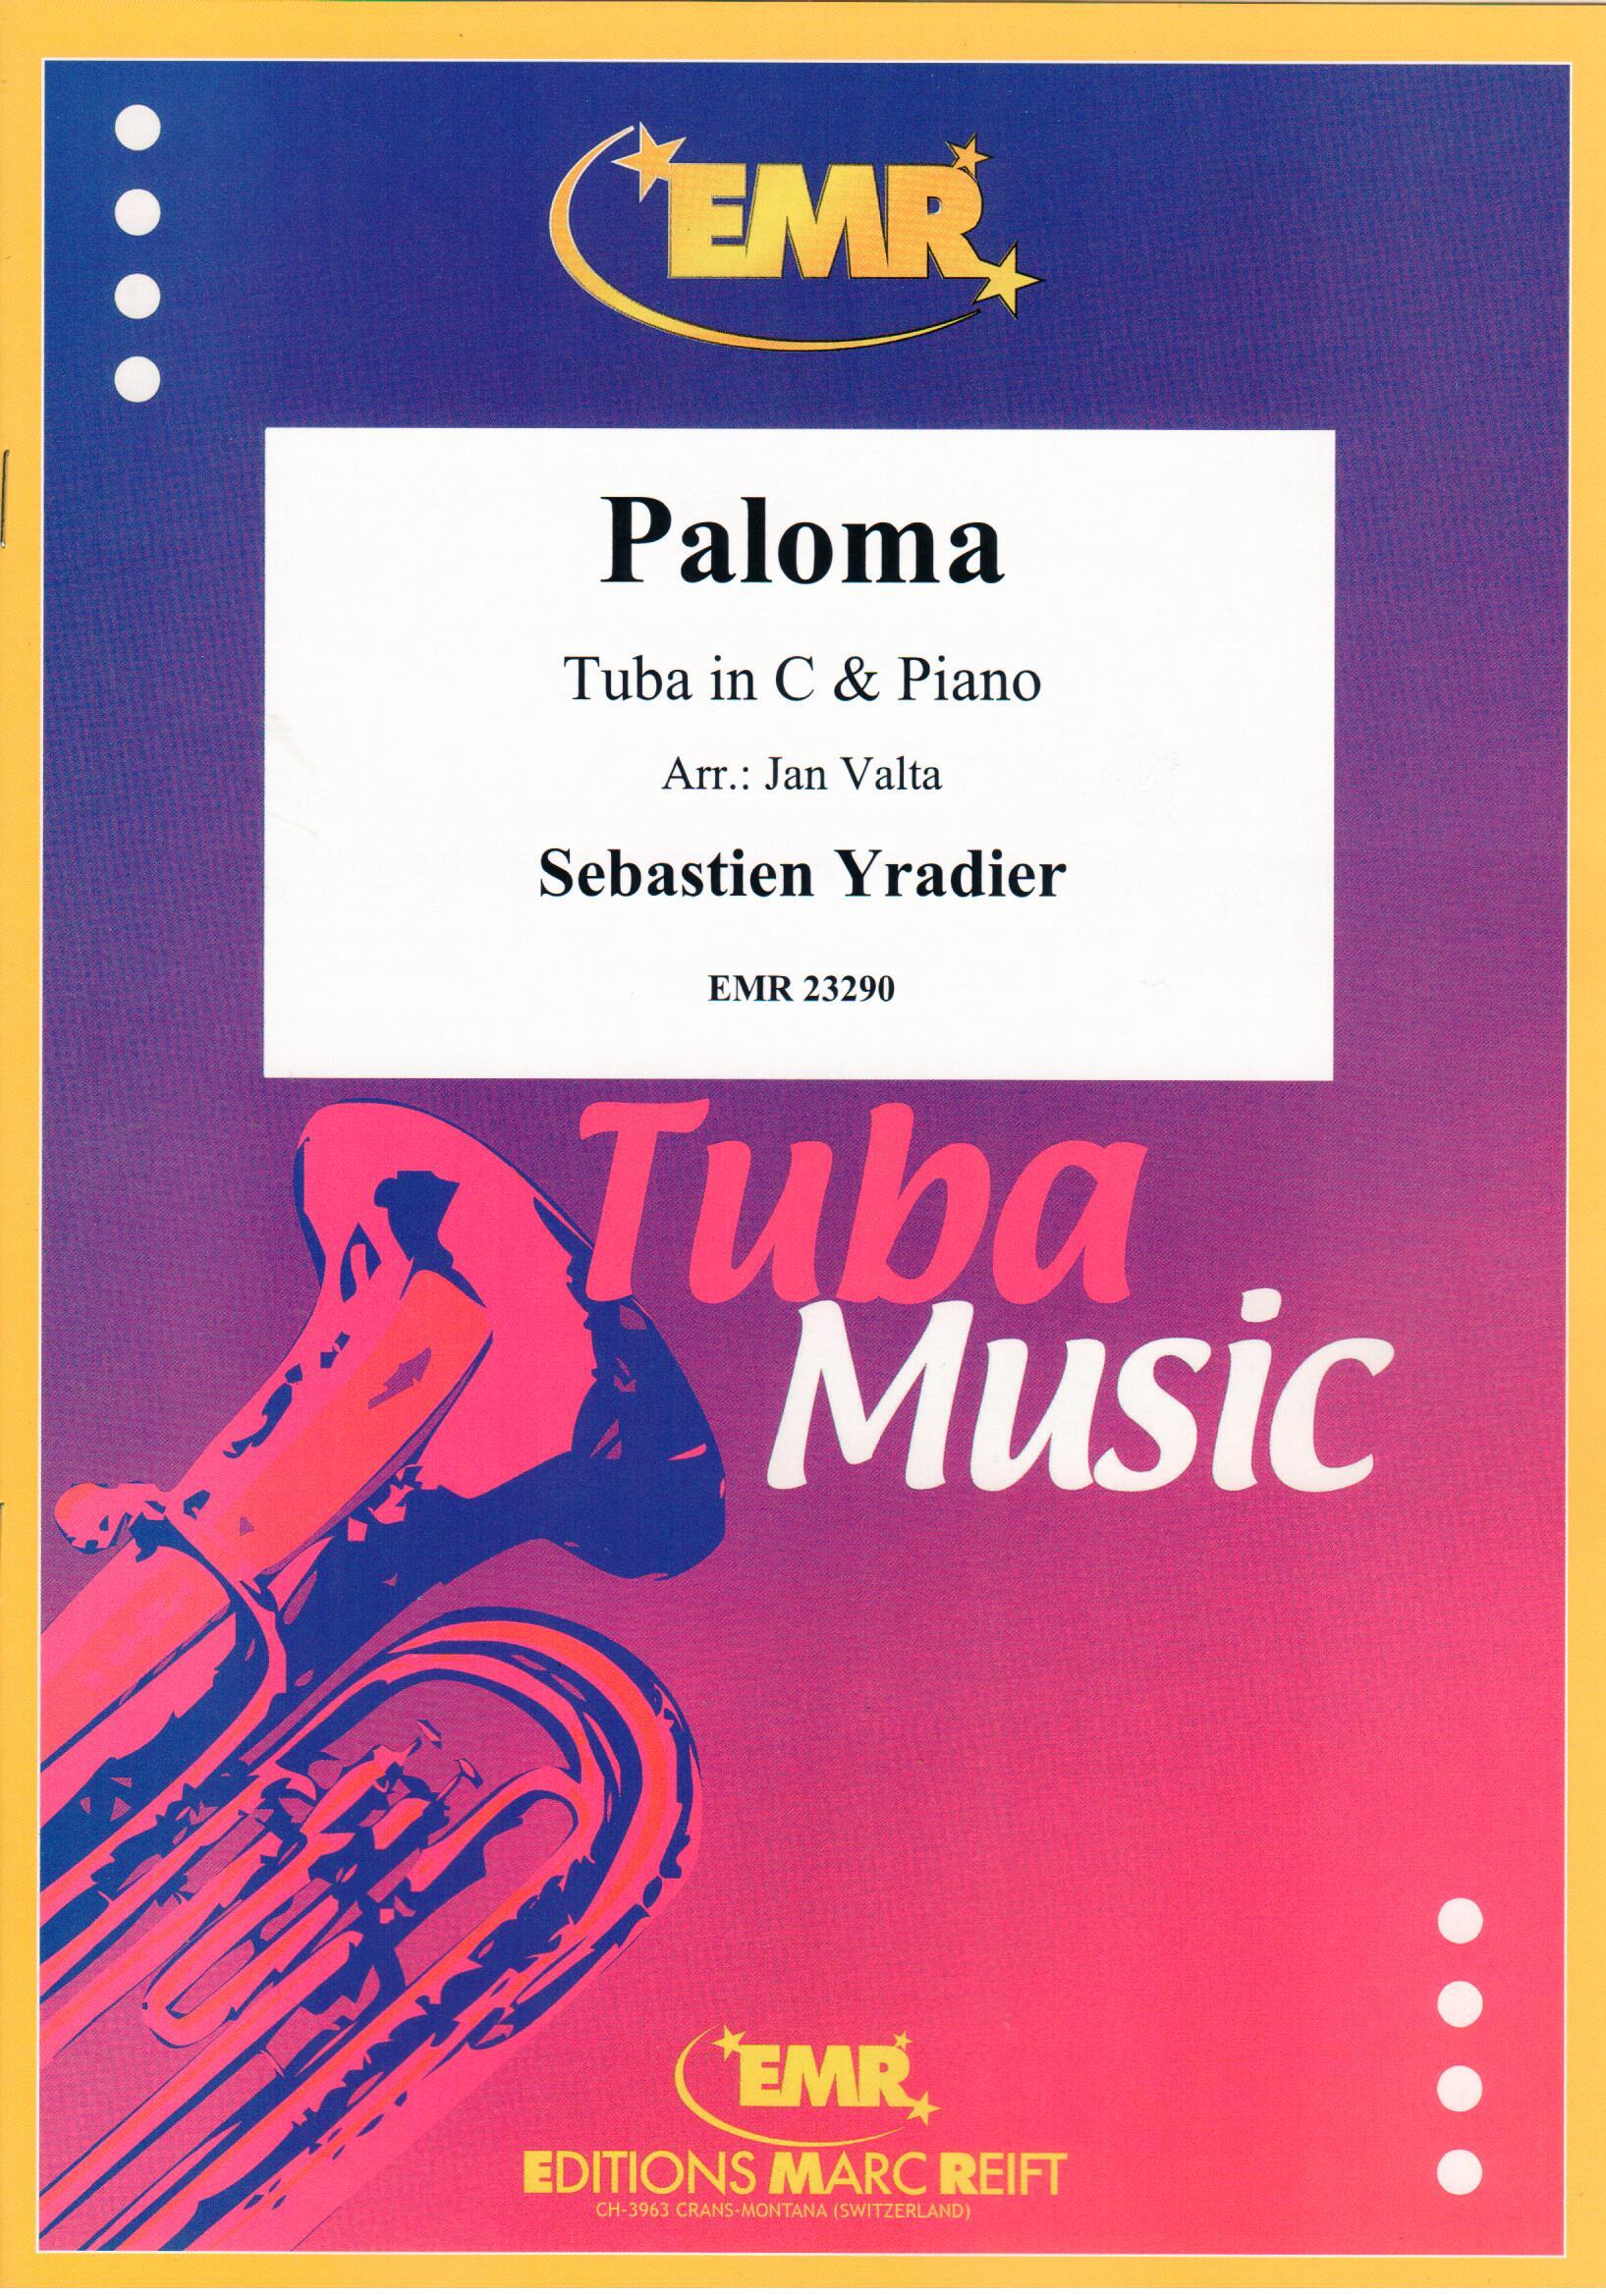 PALOMA, SOLOS - E♭. Bass